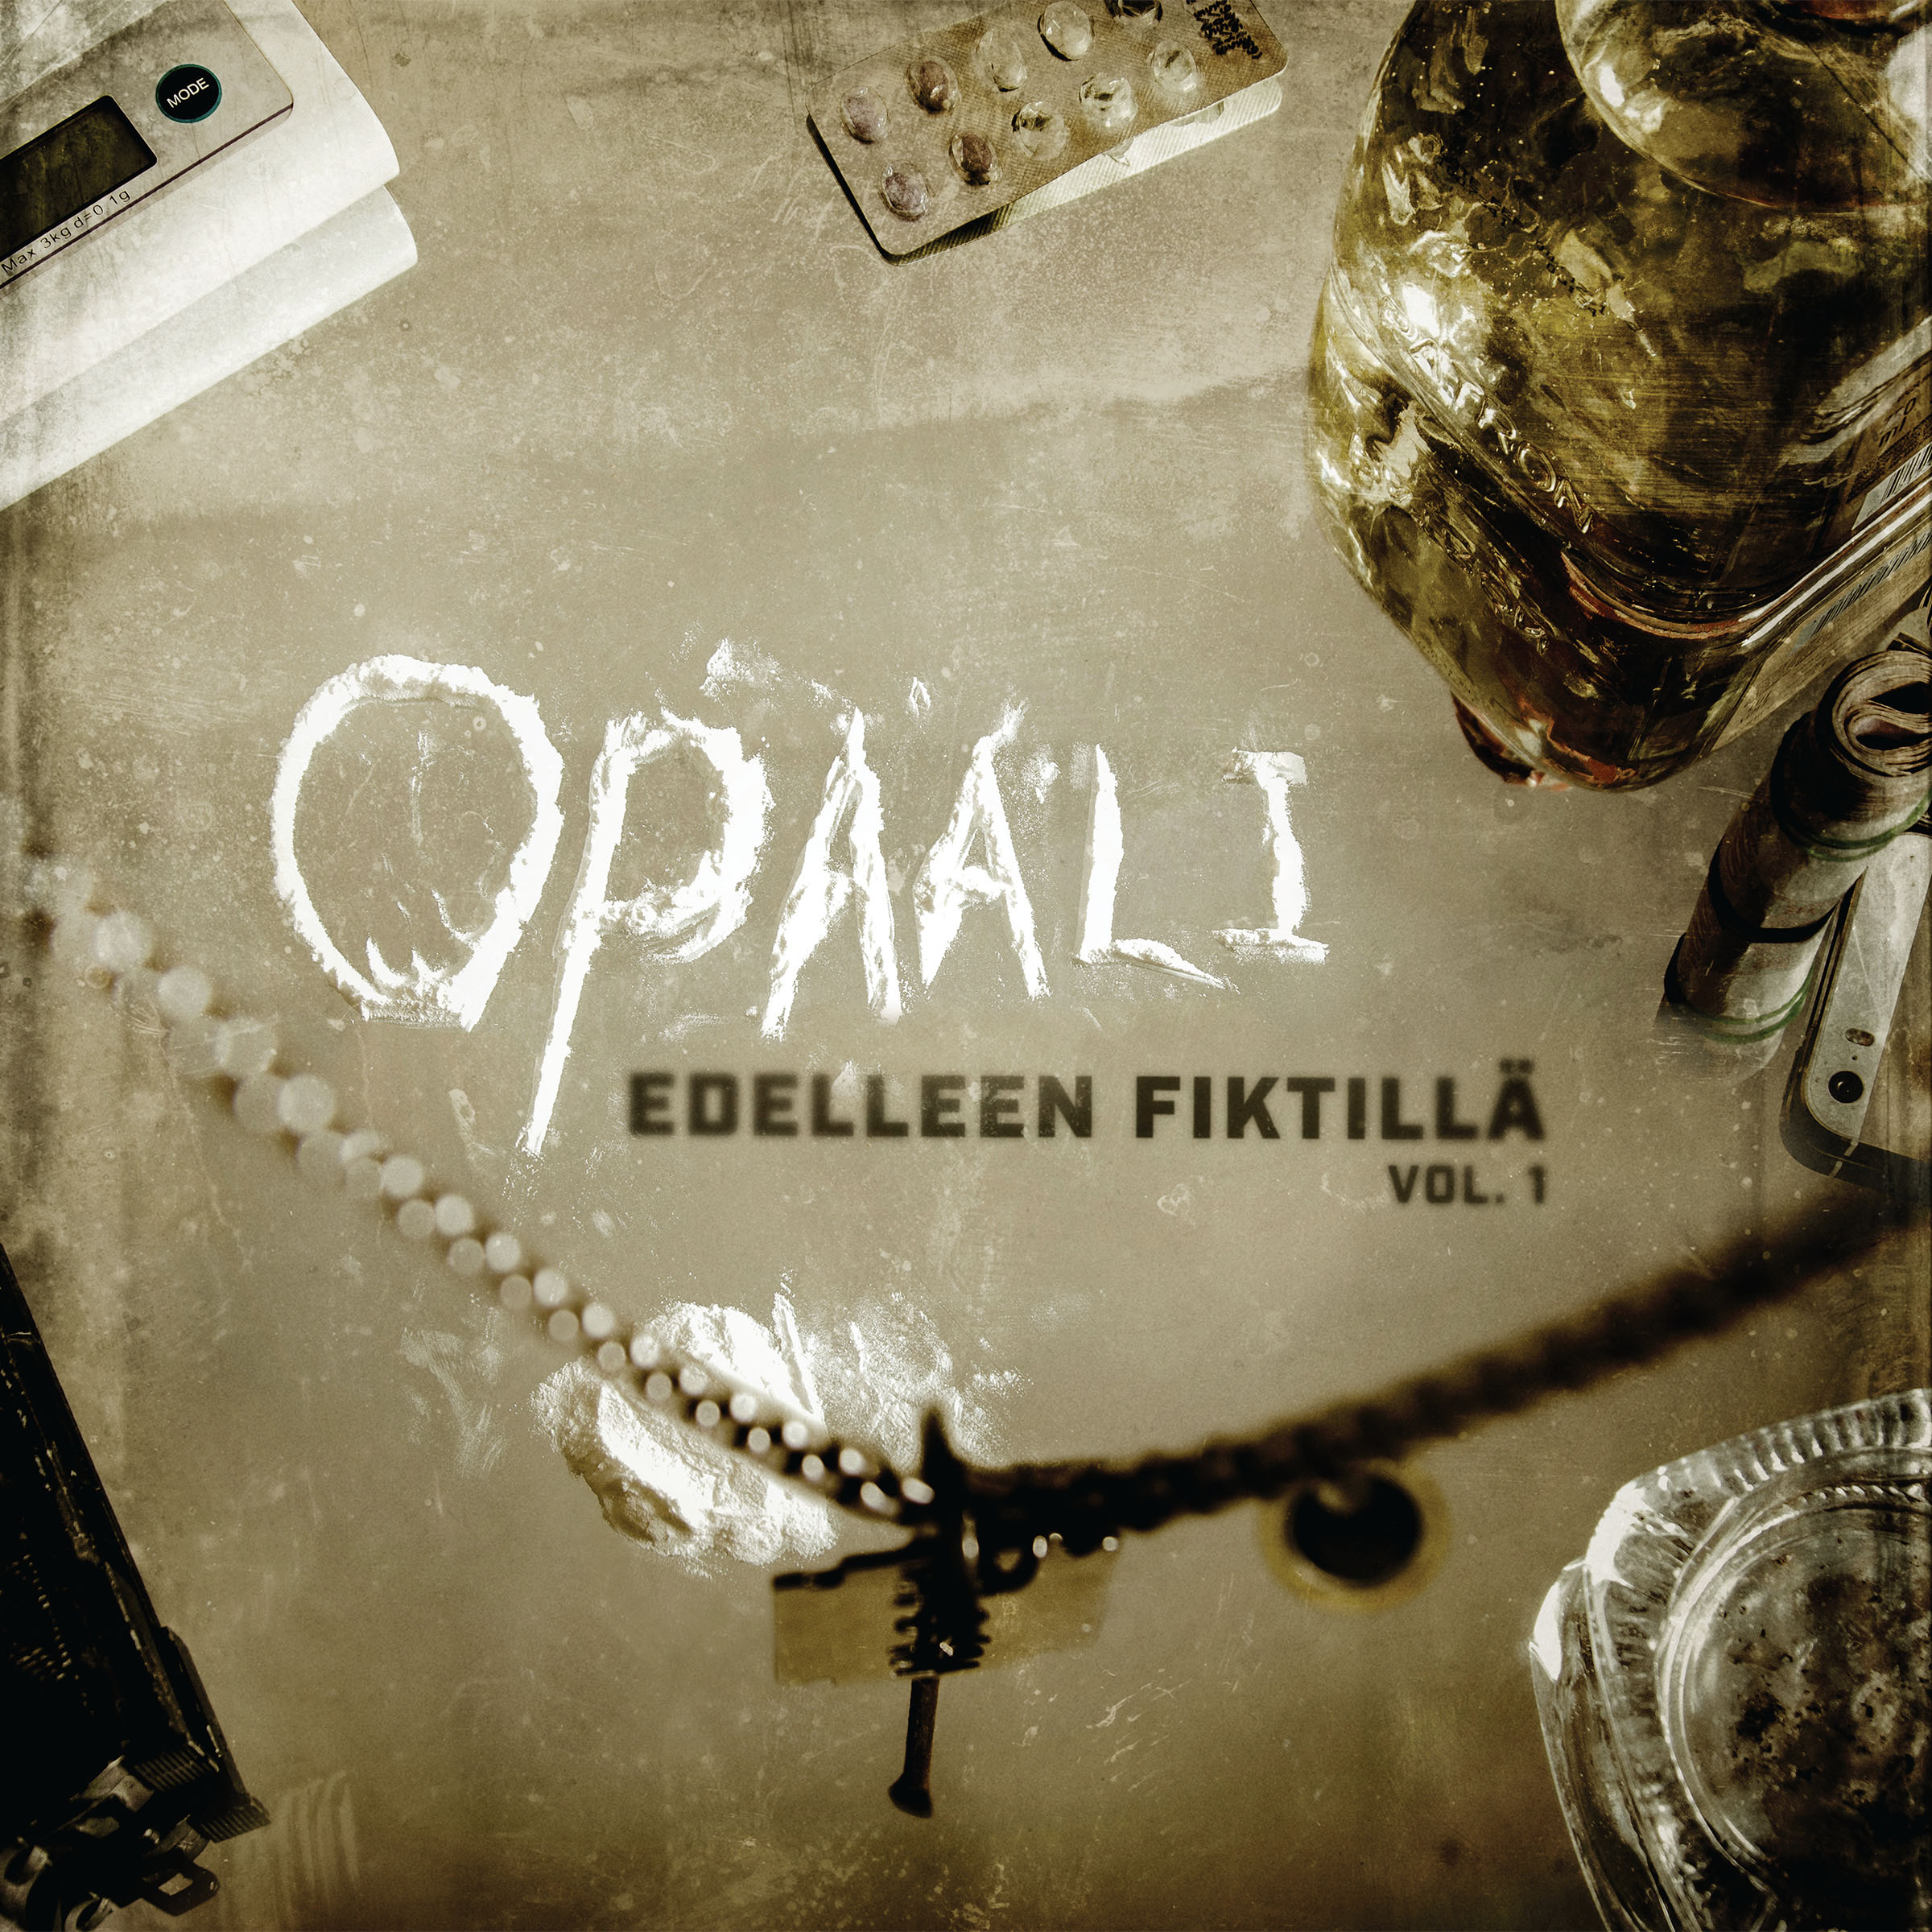 Opaali - Edelleen fiktill  Vol. 1